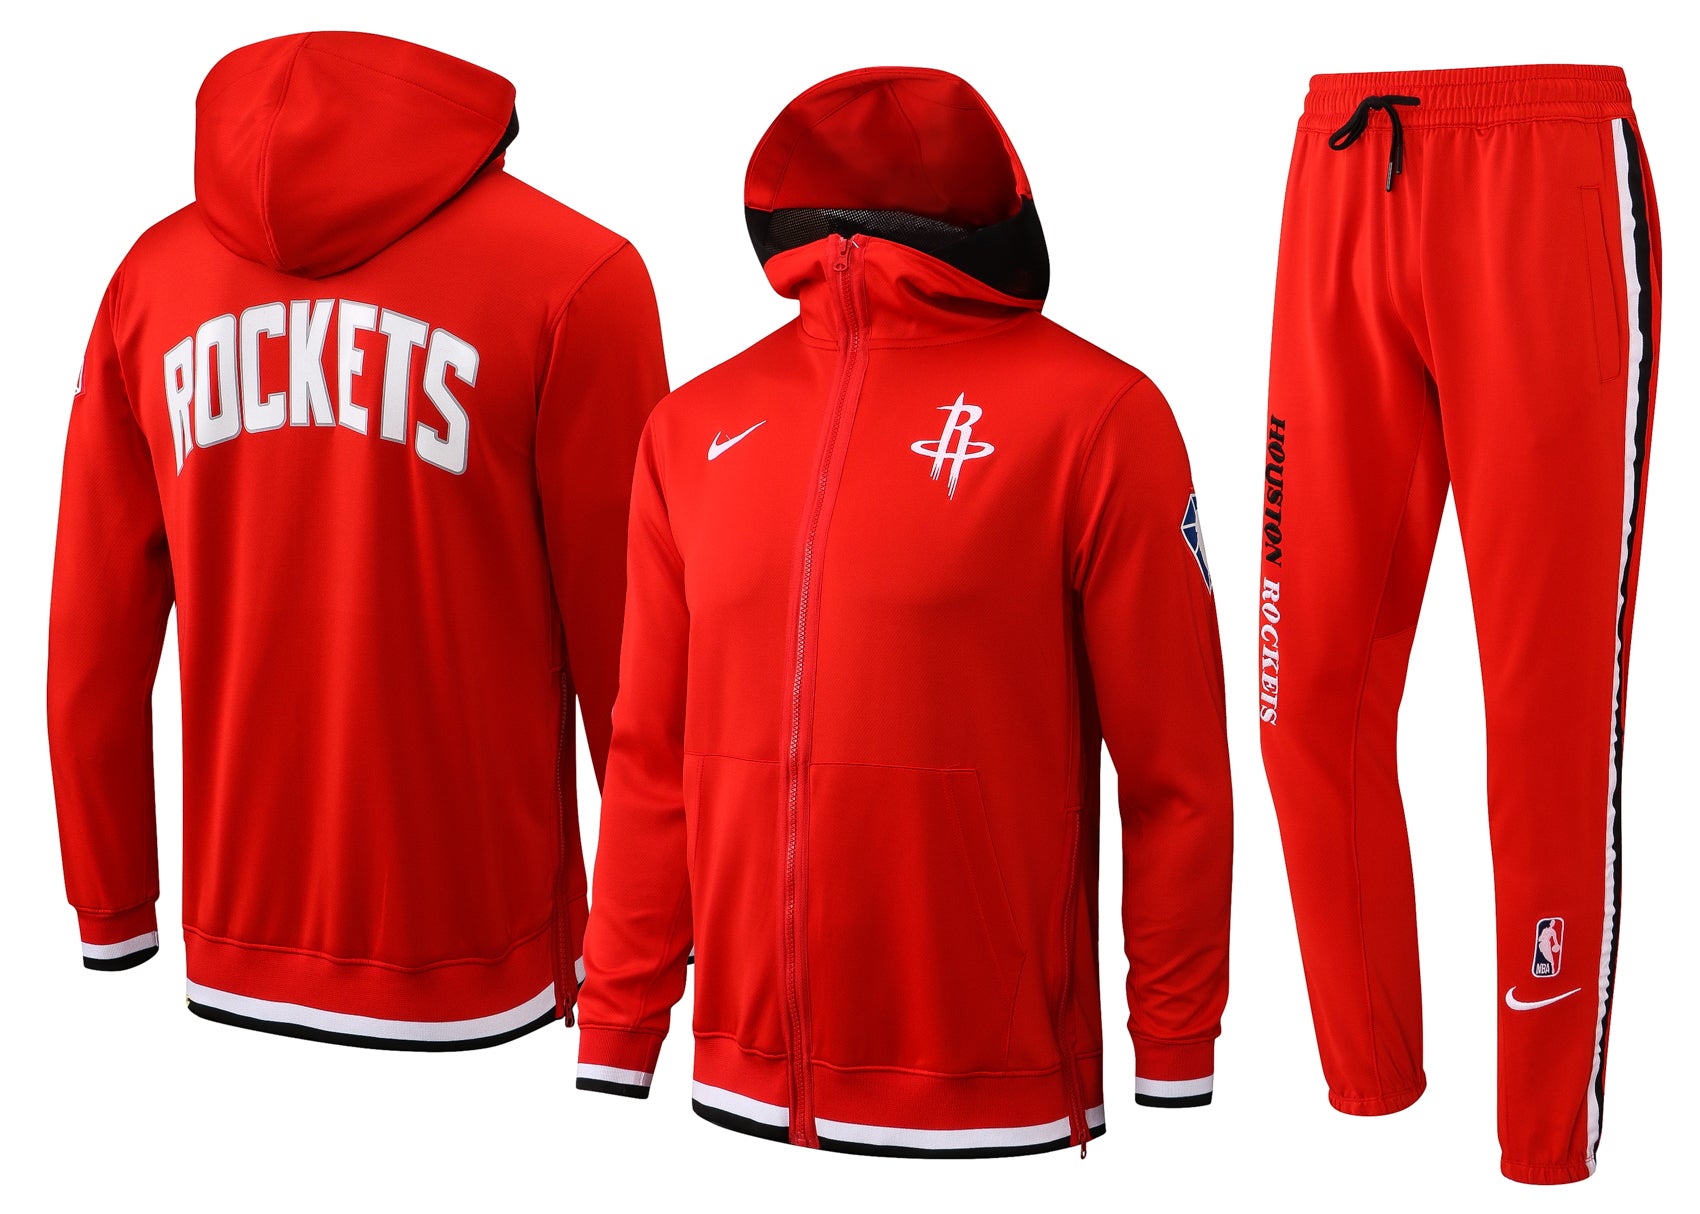 Costume rouge des Rockets